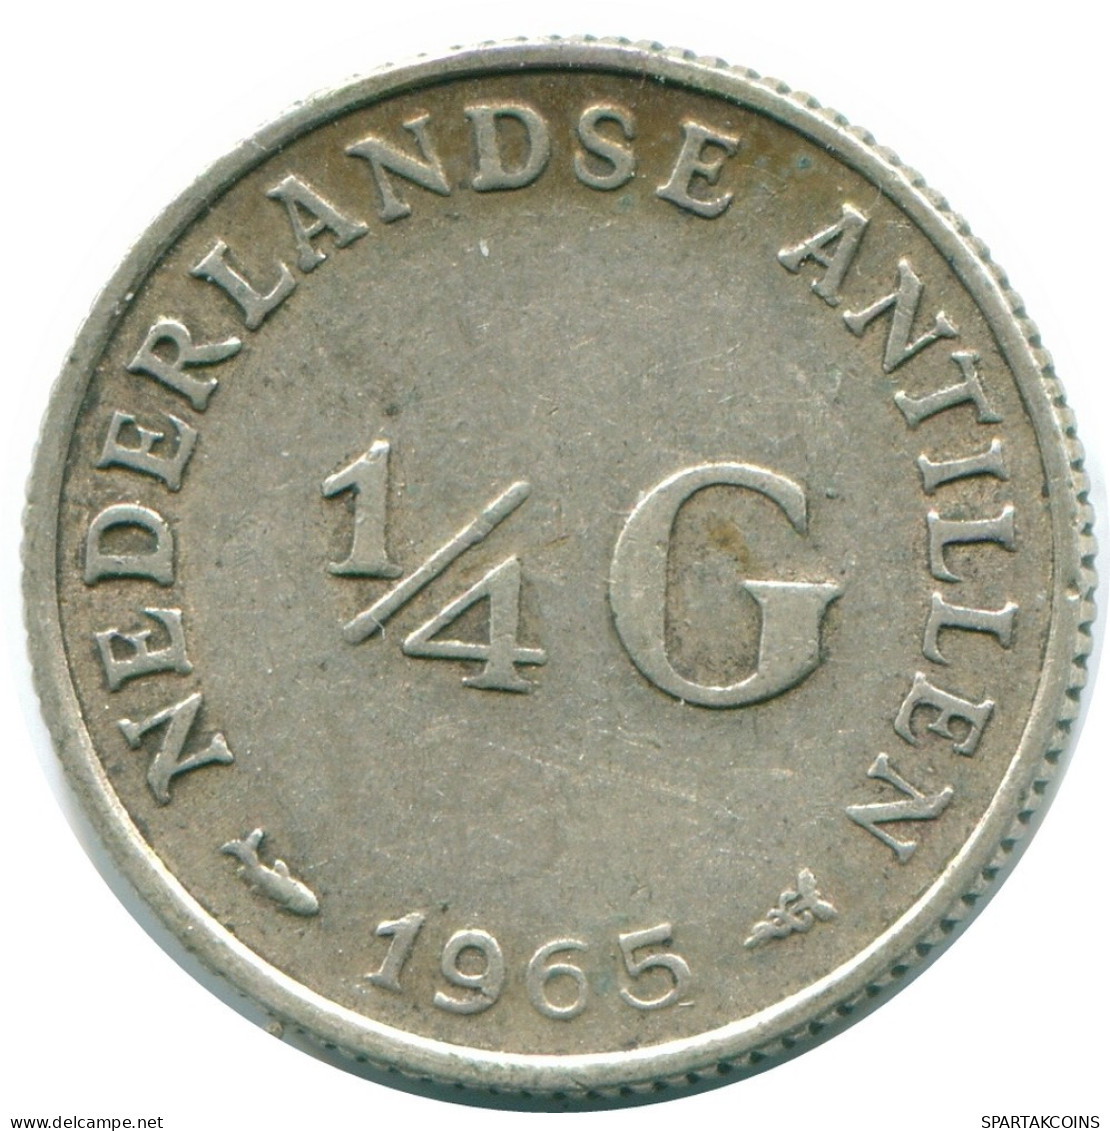 1/4 GULDEN 1965 NETHERLANDS ANTILLES SILVER Colonial Coin #NL11425.4.U.A - Antilles Néerlandaises